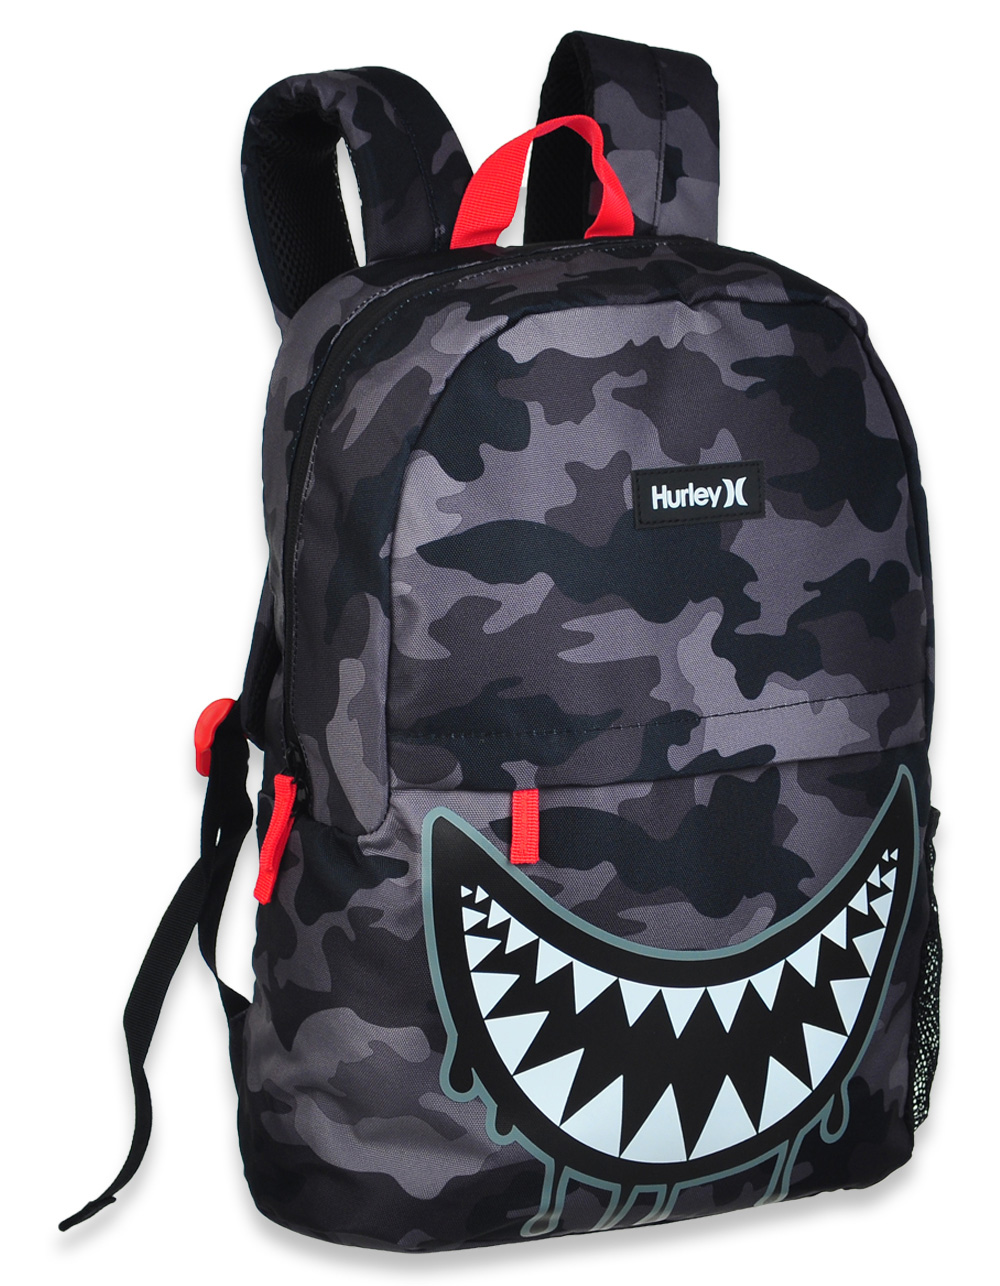 Hurley Shark Bite 18” Backpack Laptop Multicolored Check Padded